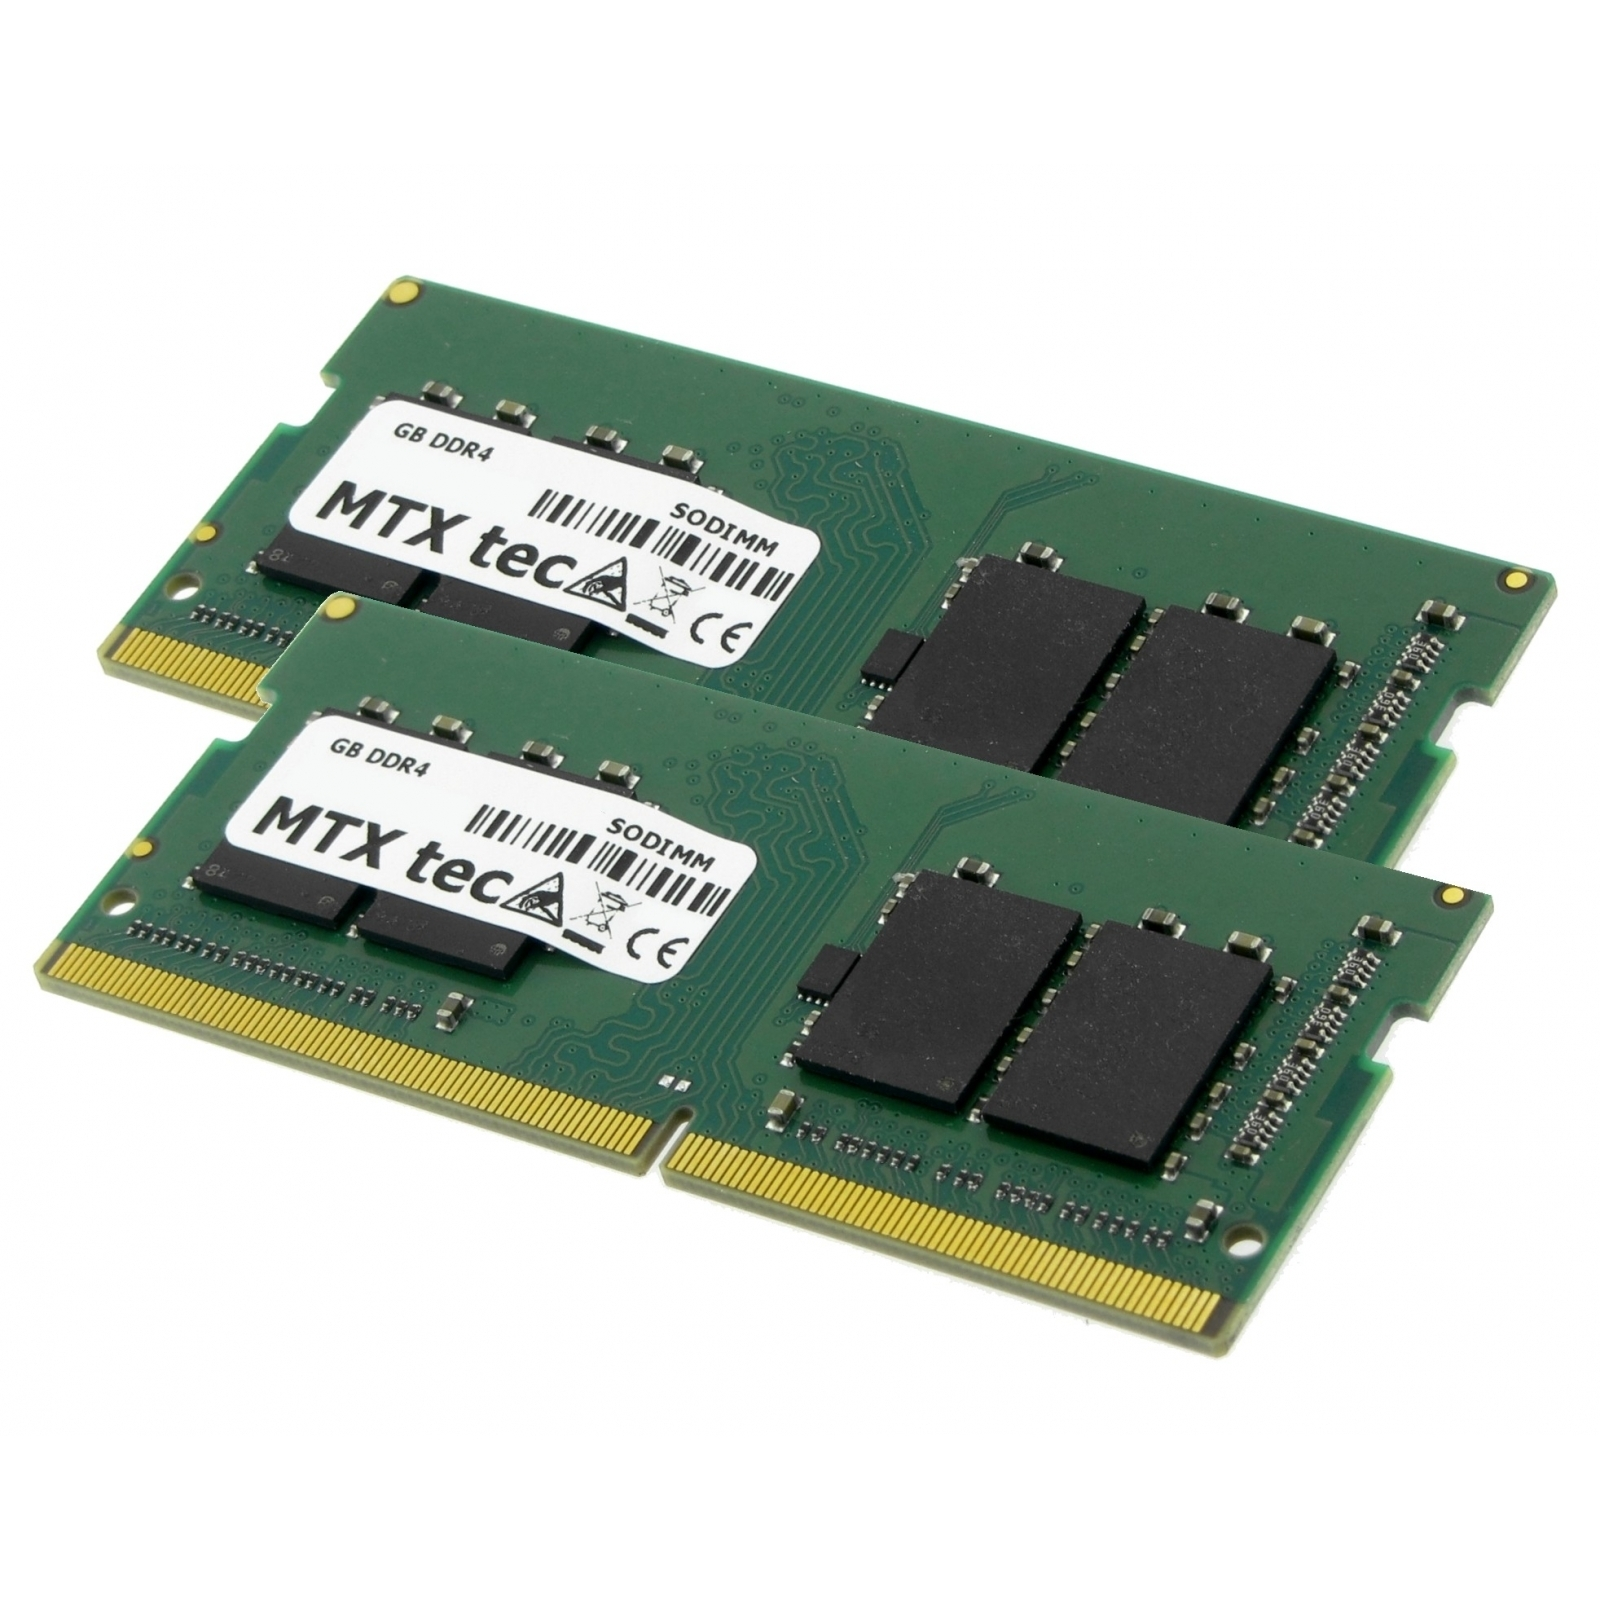 MTXTEC 16GB Kit 2x Notebook-Speicher 260 DDR4 Notebook PC4-17000 2133MHz 8 GB pin DDR4 Arbeitsspeicher SODIMM 8GB